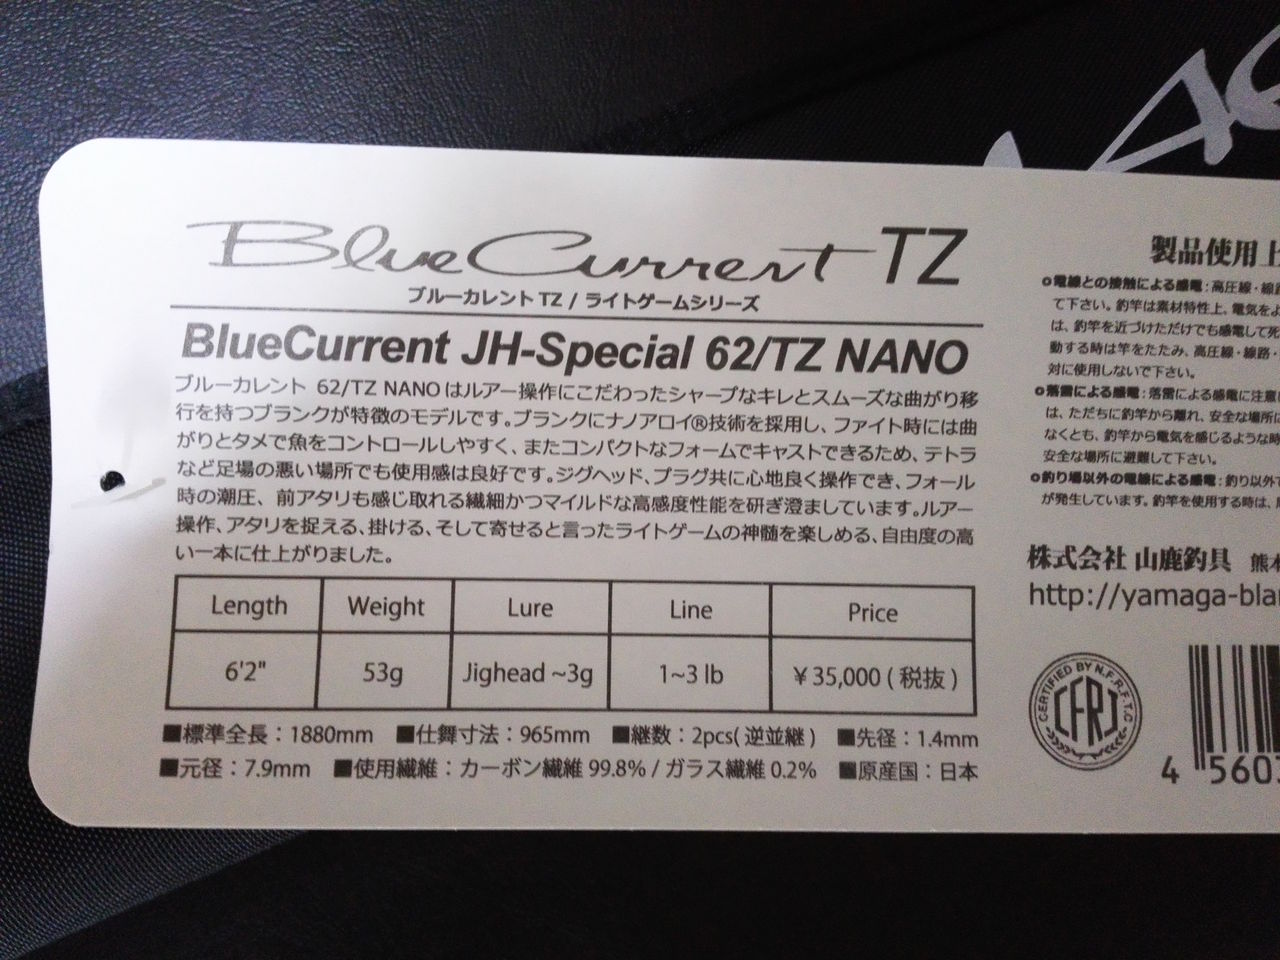 Bluecurrent 62 Tz Nanoが到着 見た目インプレ 森下のブログ